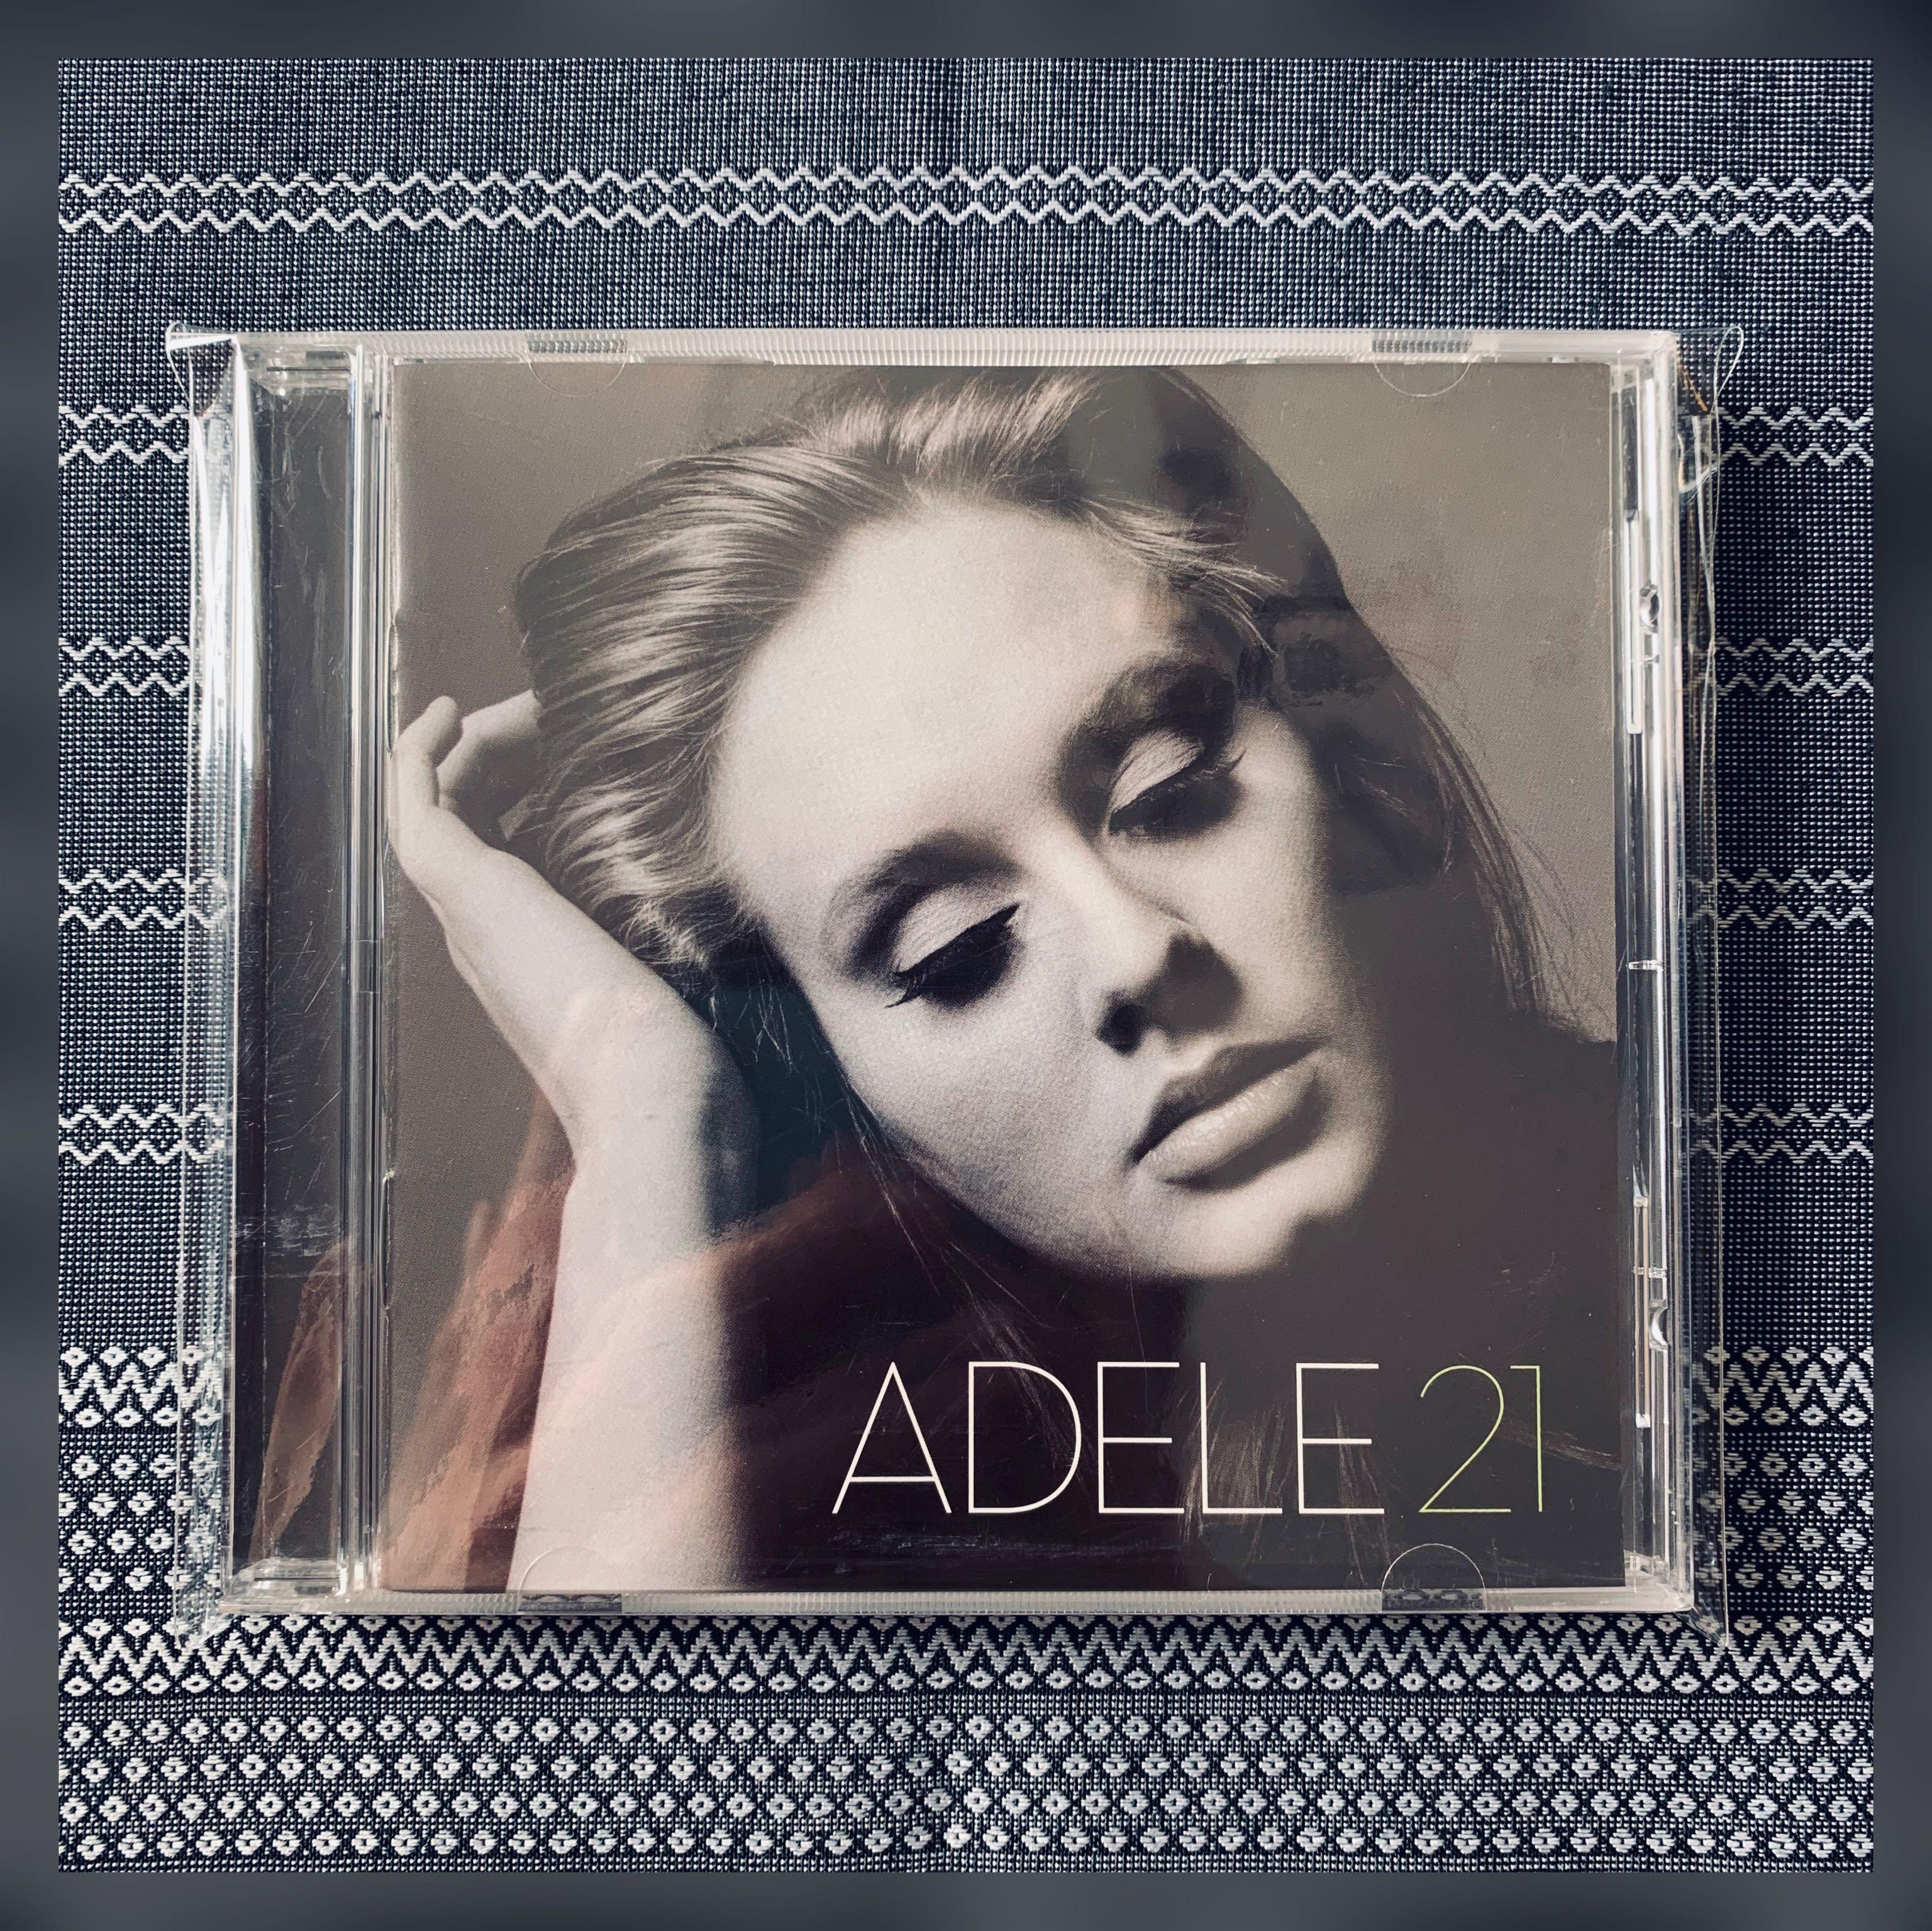 Adele - 21 CD (Singapore Press)